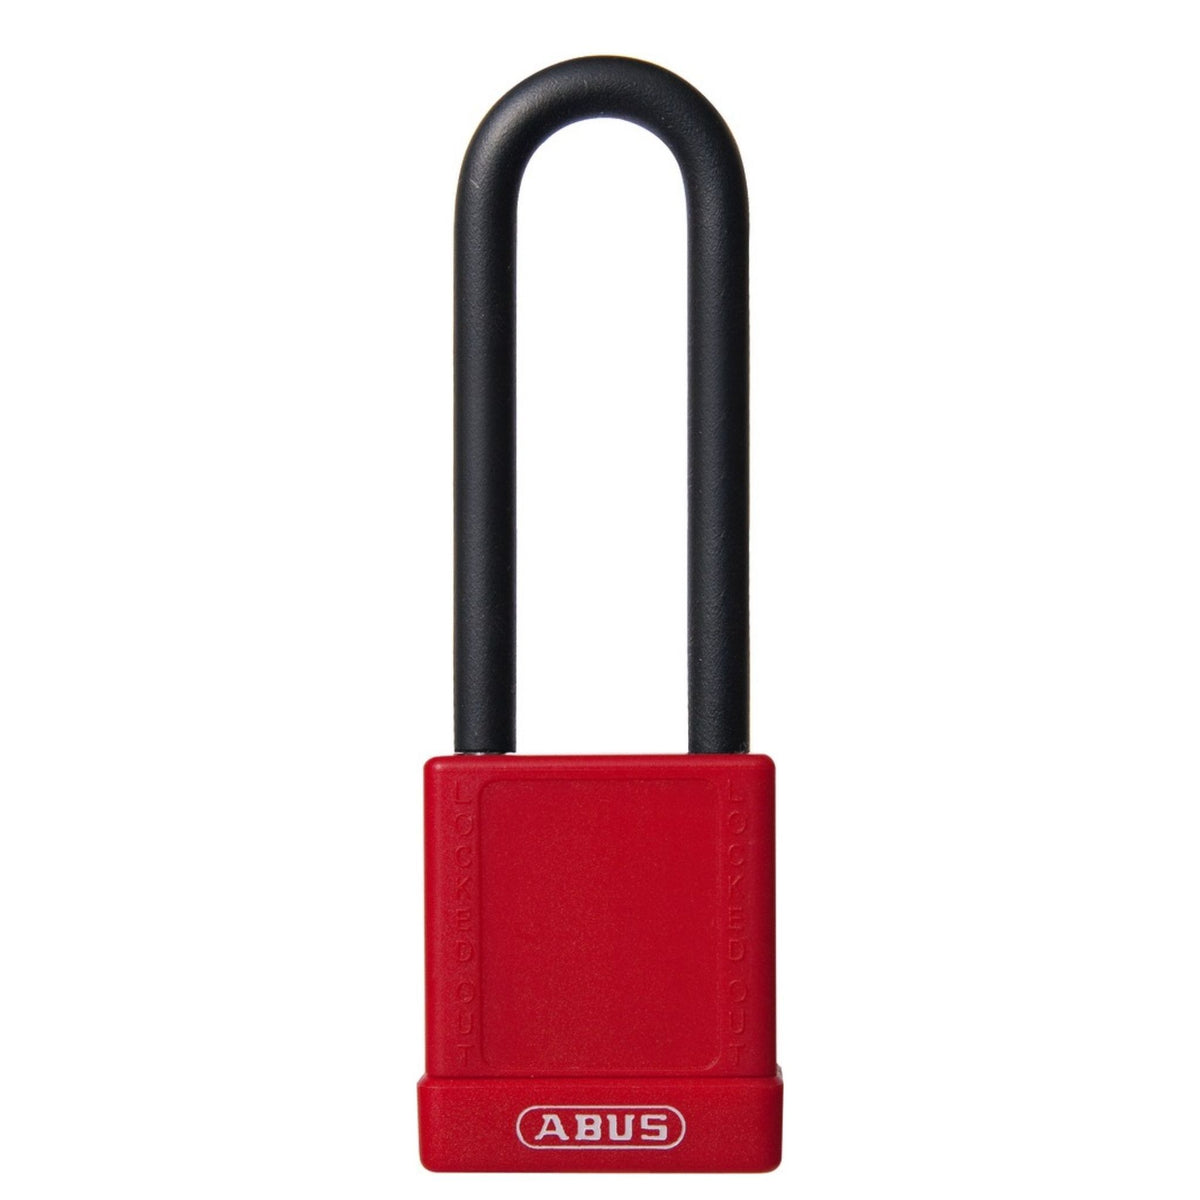 Abus 74/40HB75 KA Keyed Alike Red Safety Padlock, 3-Inch Shackle - The Lock Source